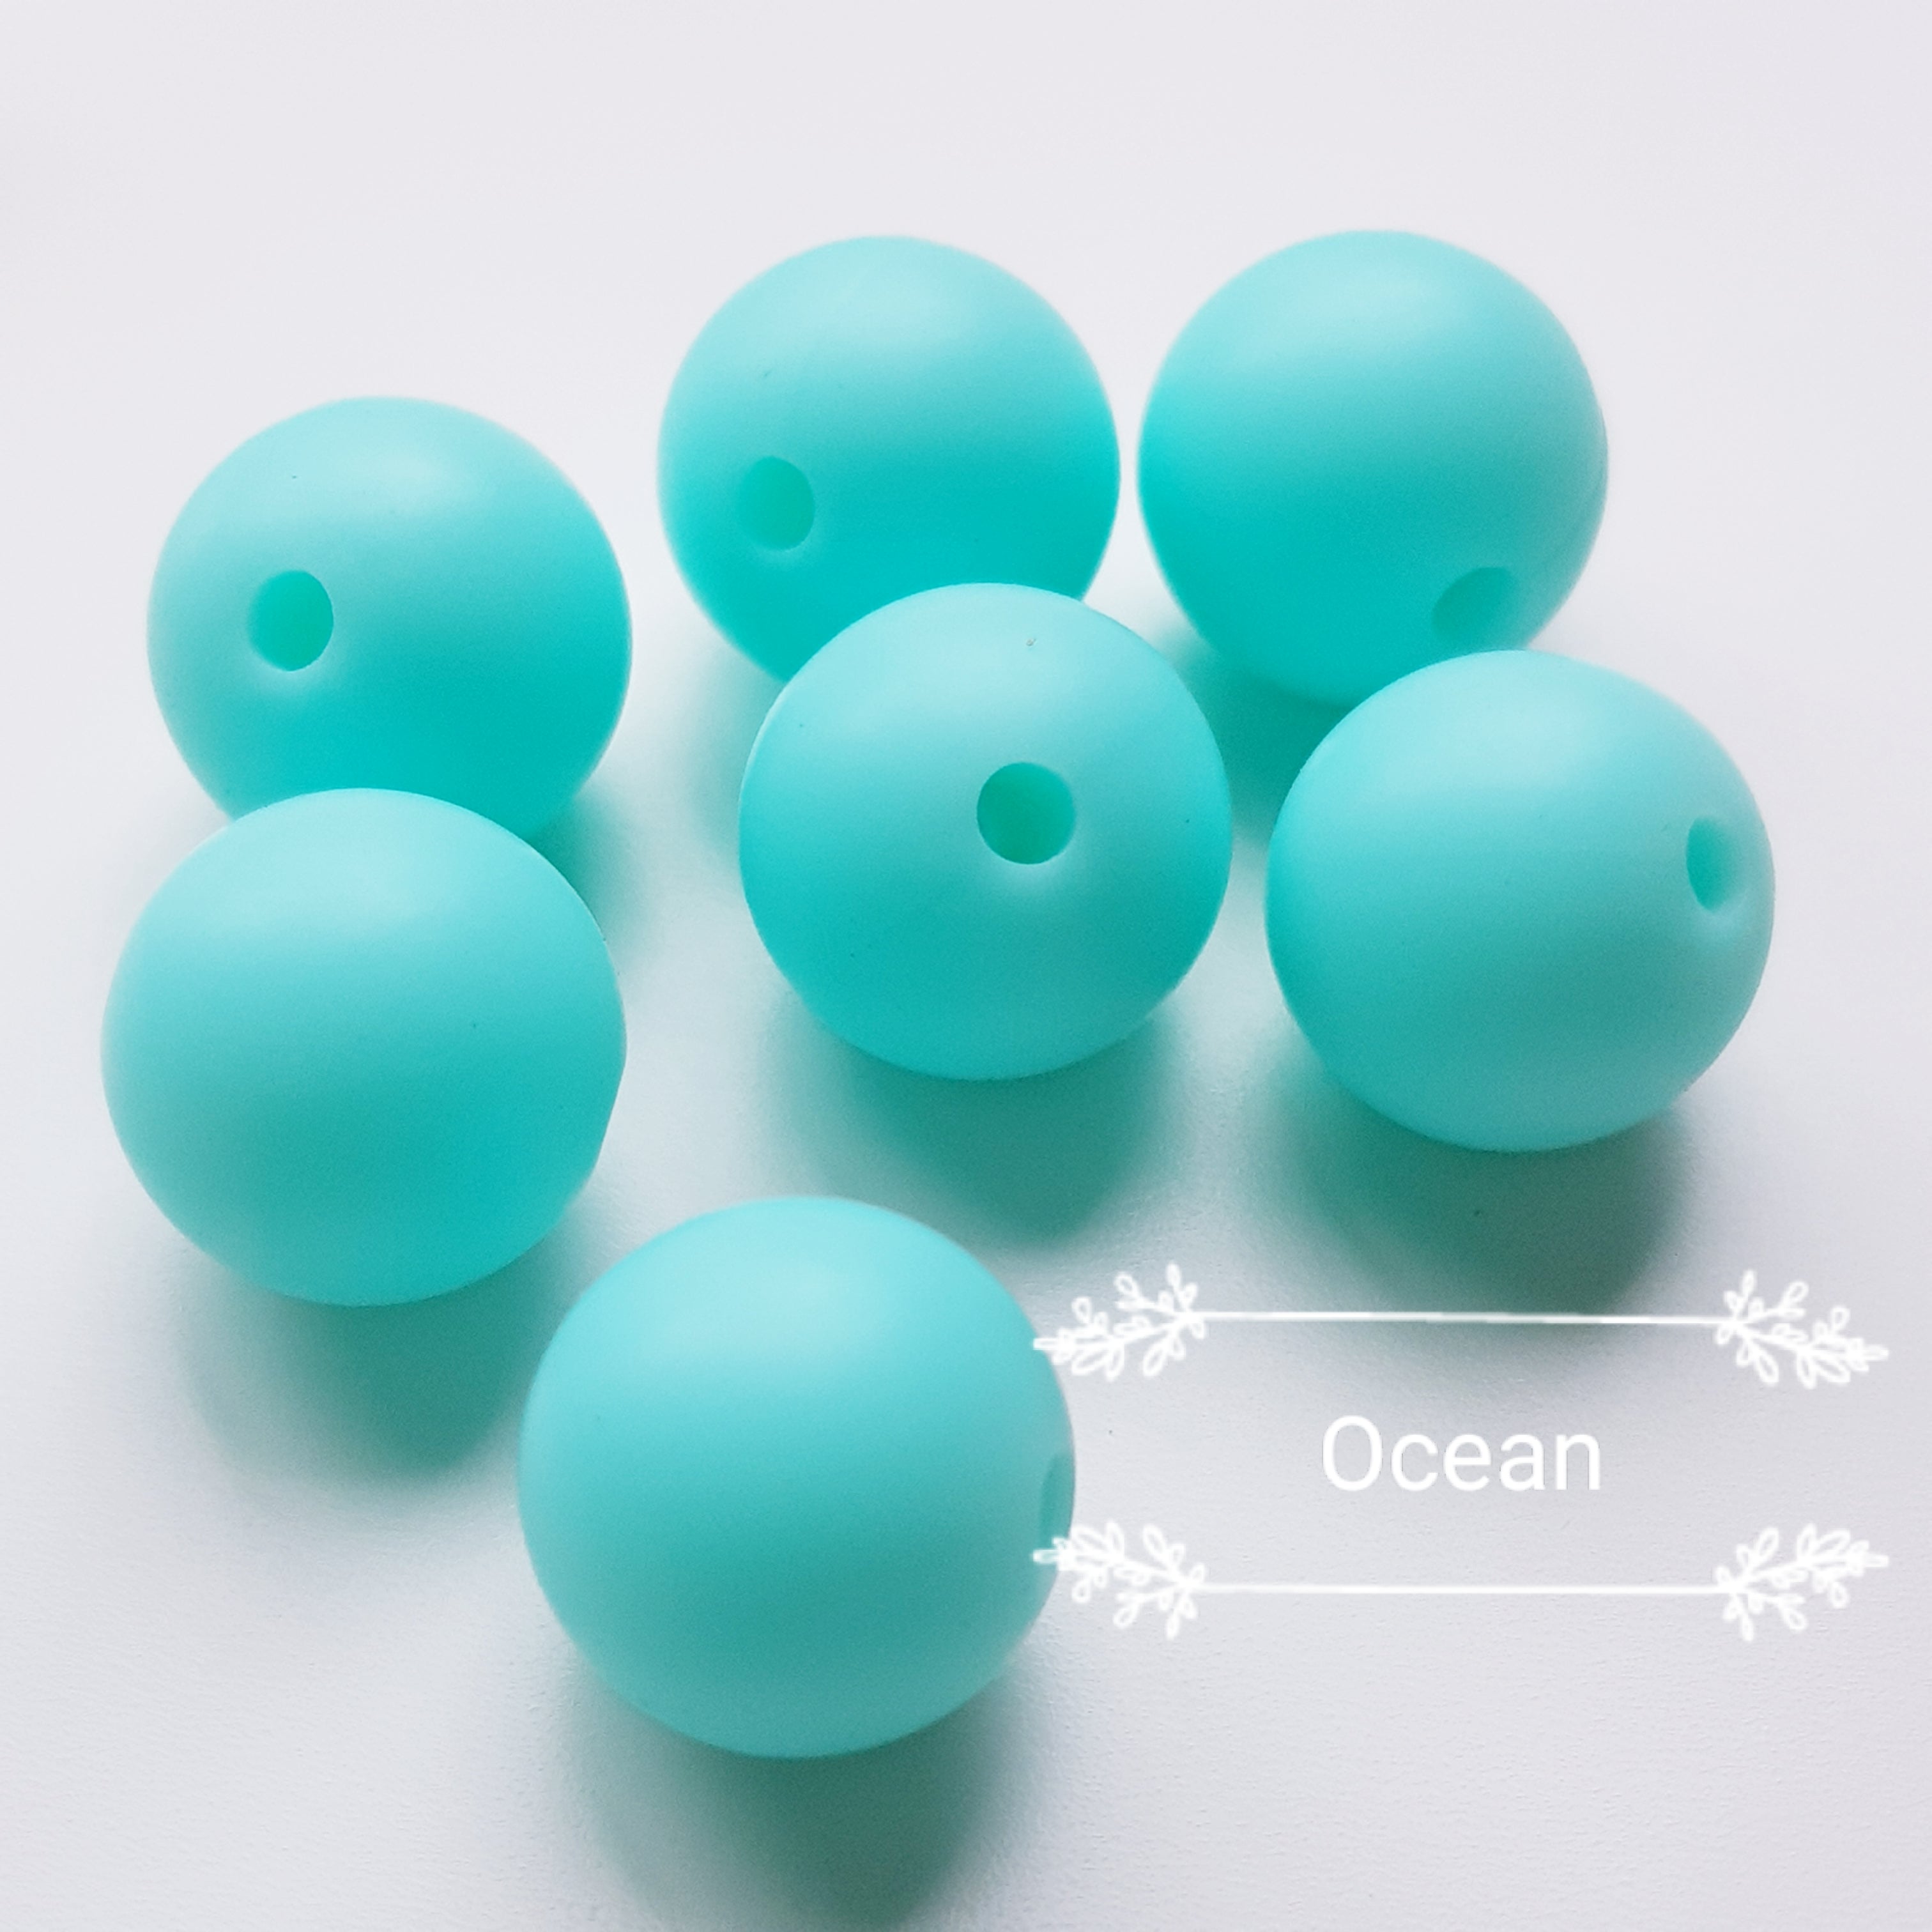 12mm round beads - Eco Bebe NZ